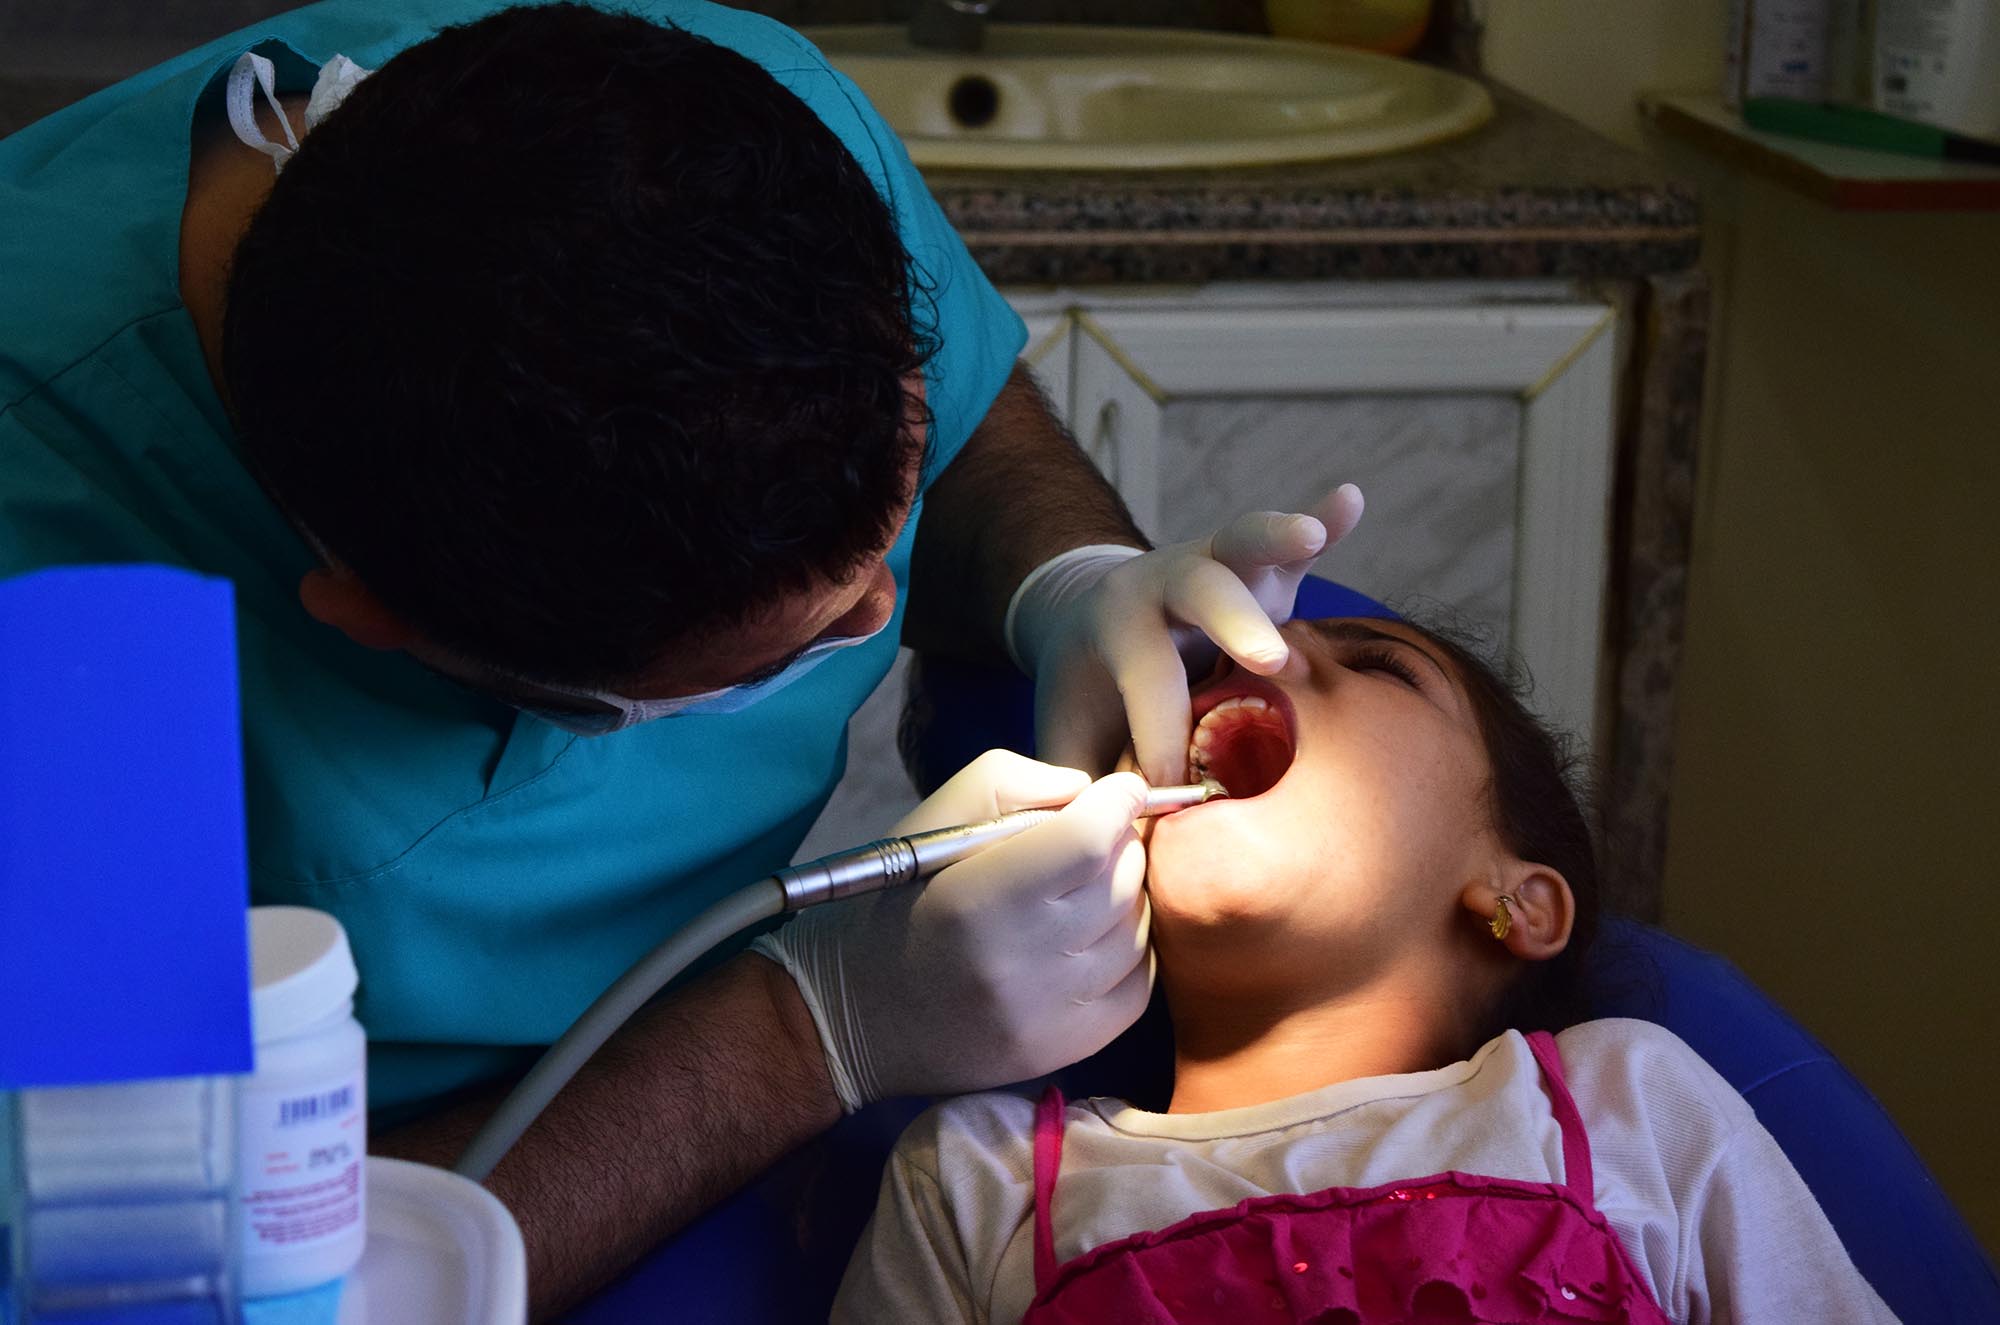 Dalaa undergoes dental treatment at a health care center in Lebanon.